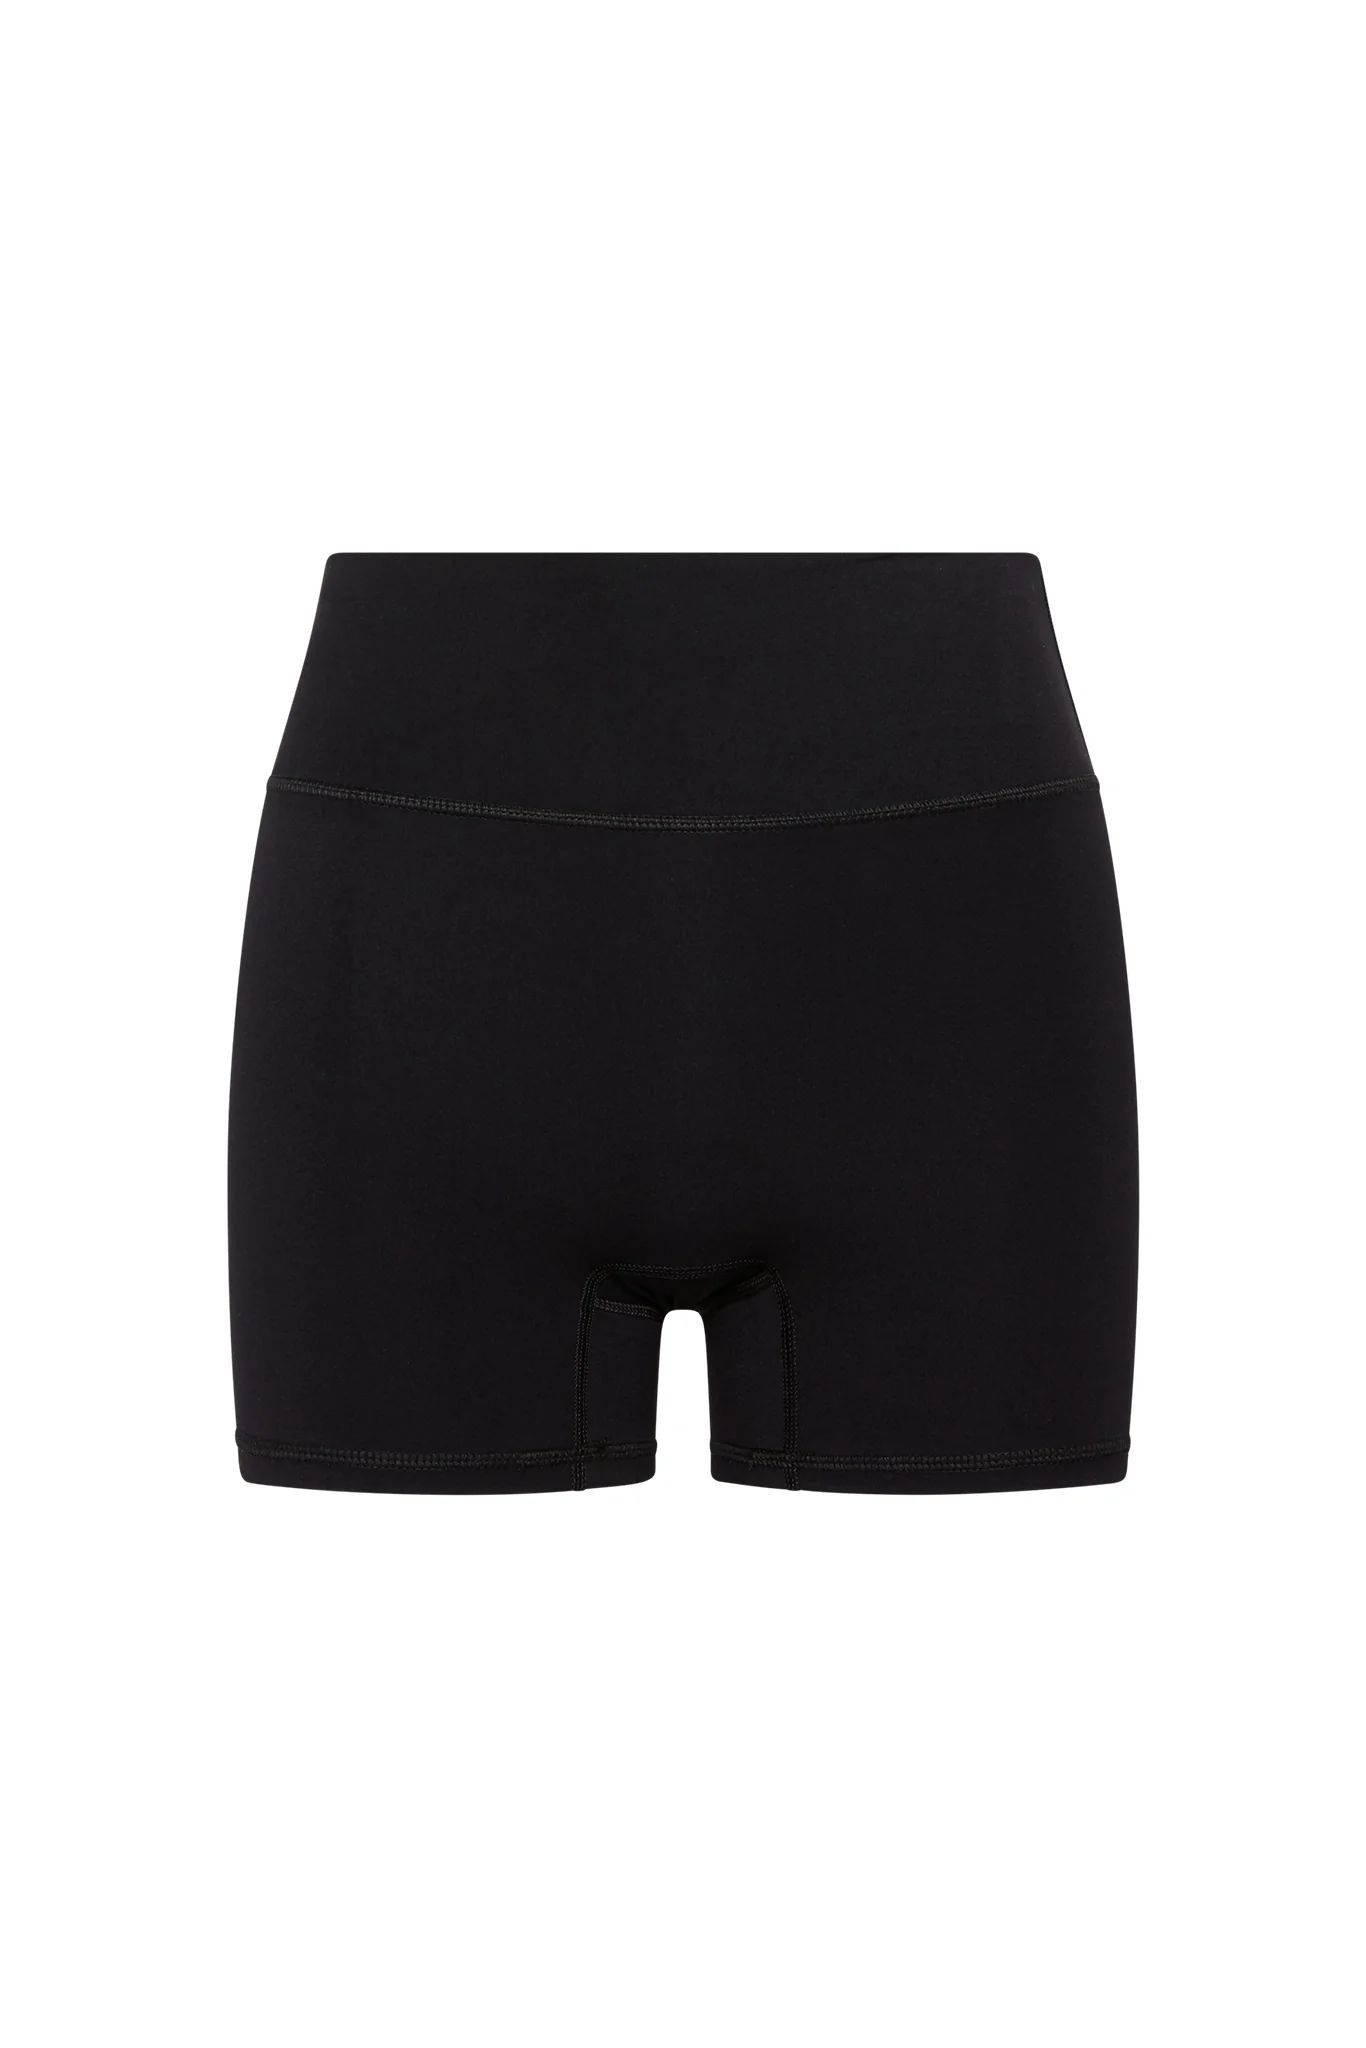 Elysian Short 4.5" - Black | Monday Swimwear